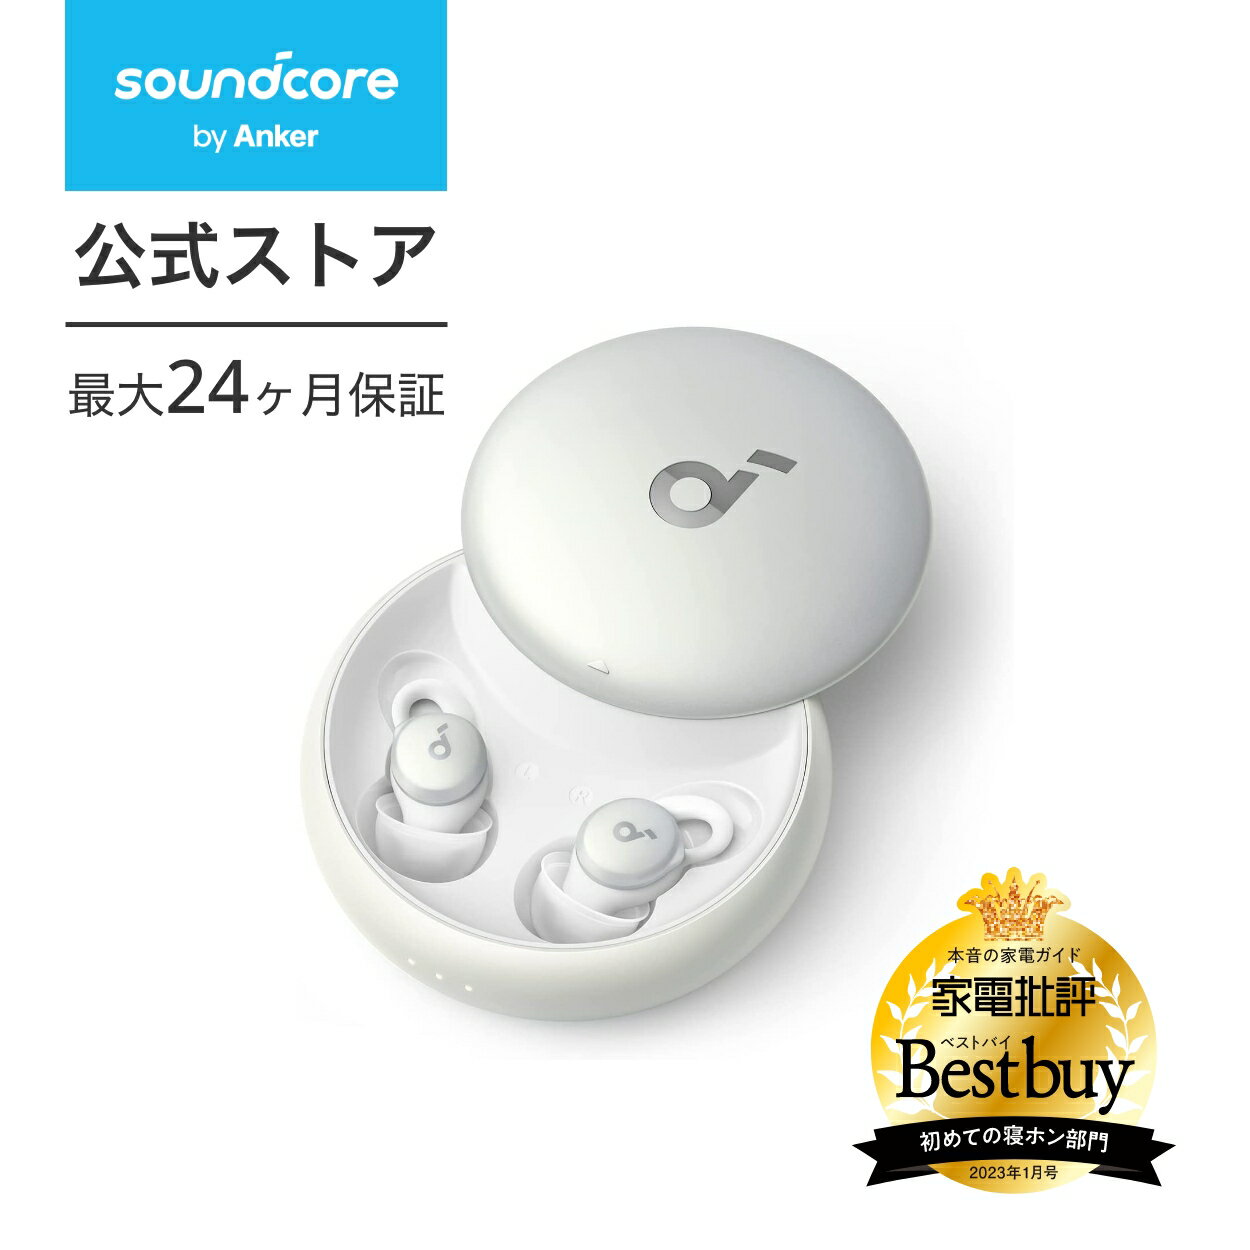 【25%OFF 6/11まで】Anker Soundcore Sleep A10 ワイヤレスイヤホン Bluetooth 5.2 【完全ワイヤレスイヤホン / IPX4防水規格 / 最大47時間音楽再生 / 専用アプリ対応 / 睡眠時間のモニタリン…